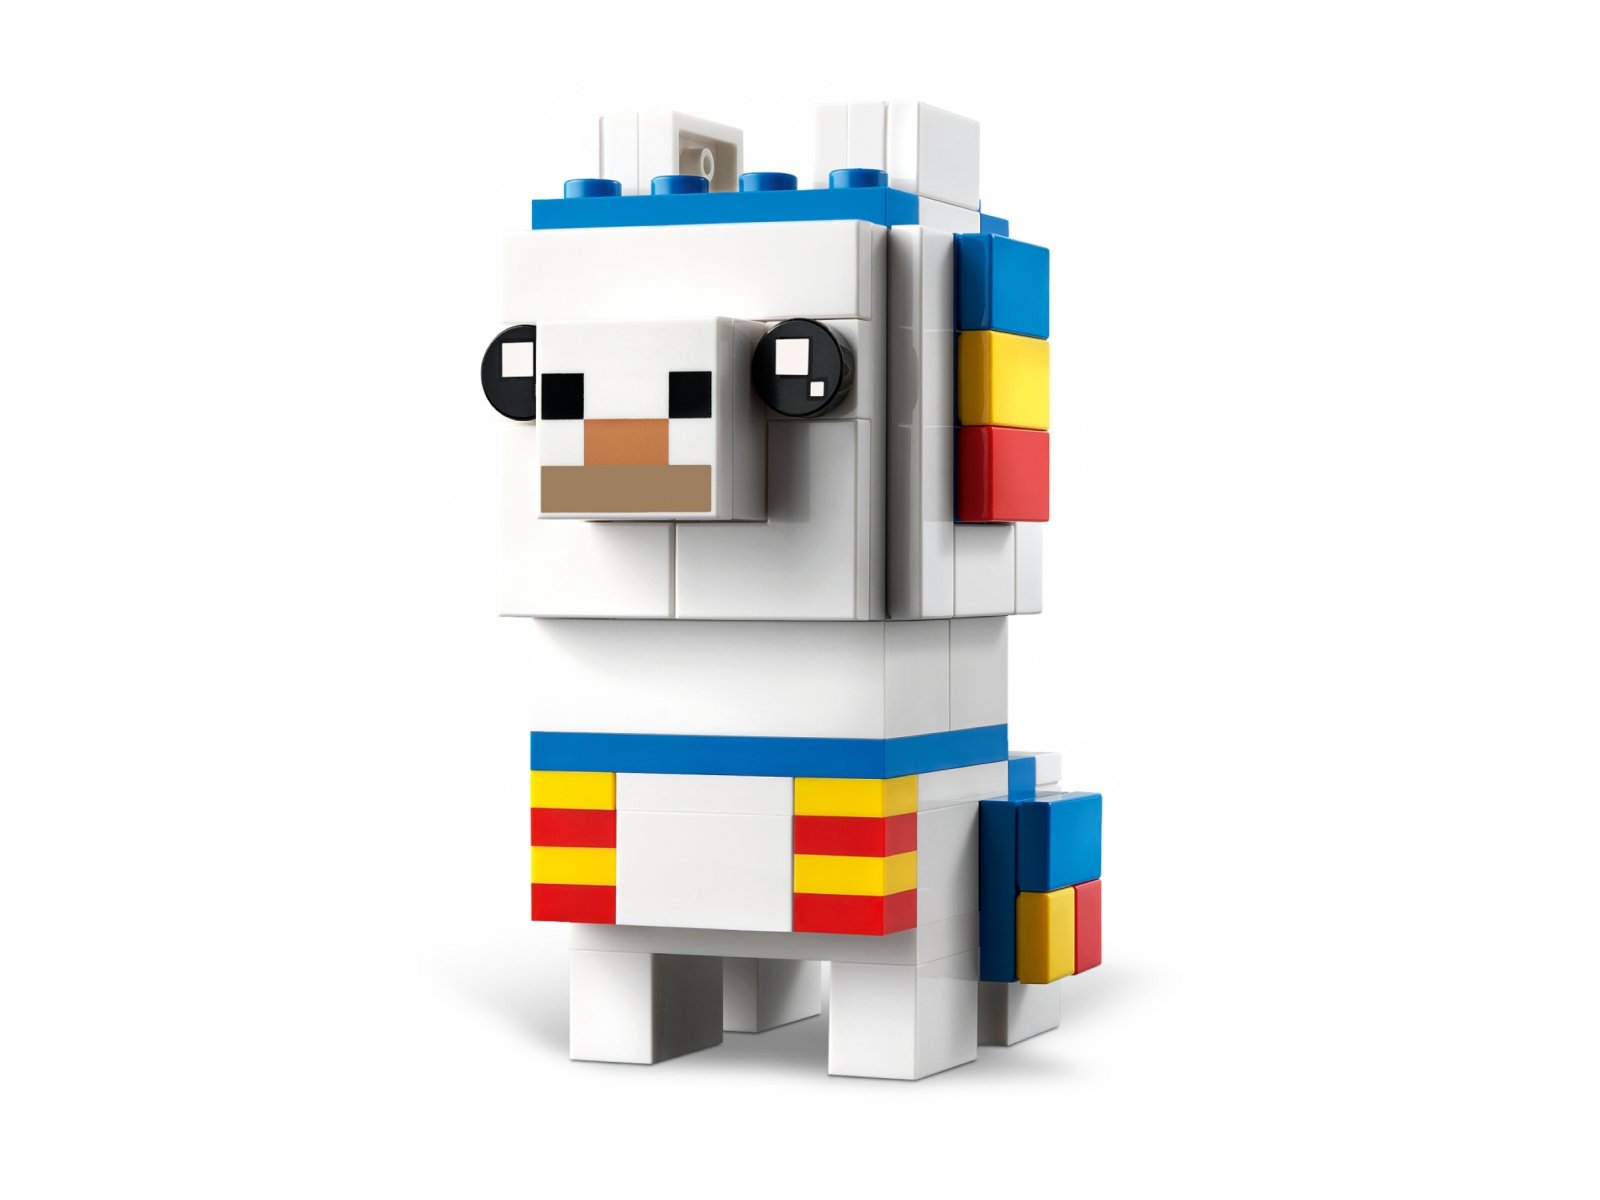 LEGO BrickHeadz 40625 Lama